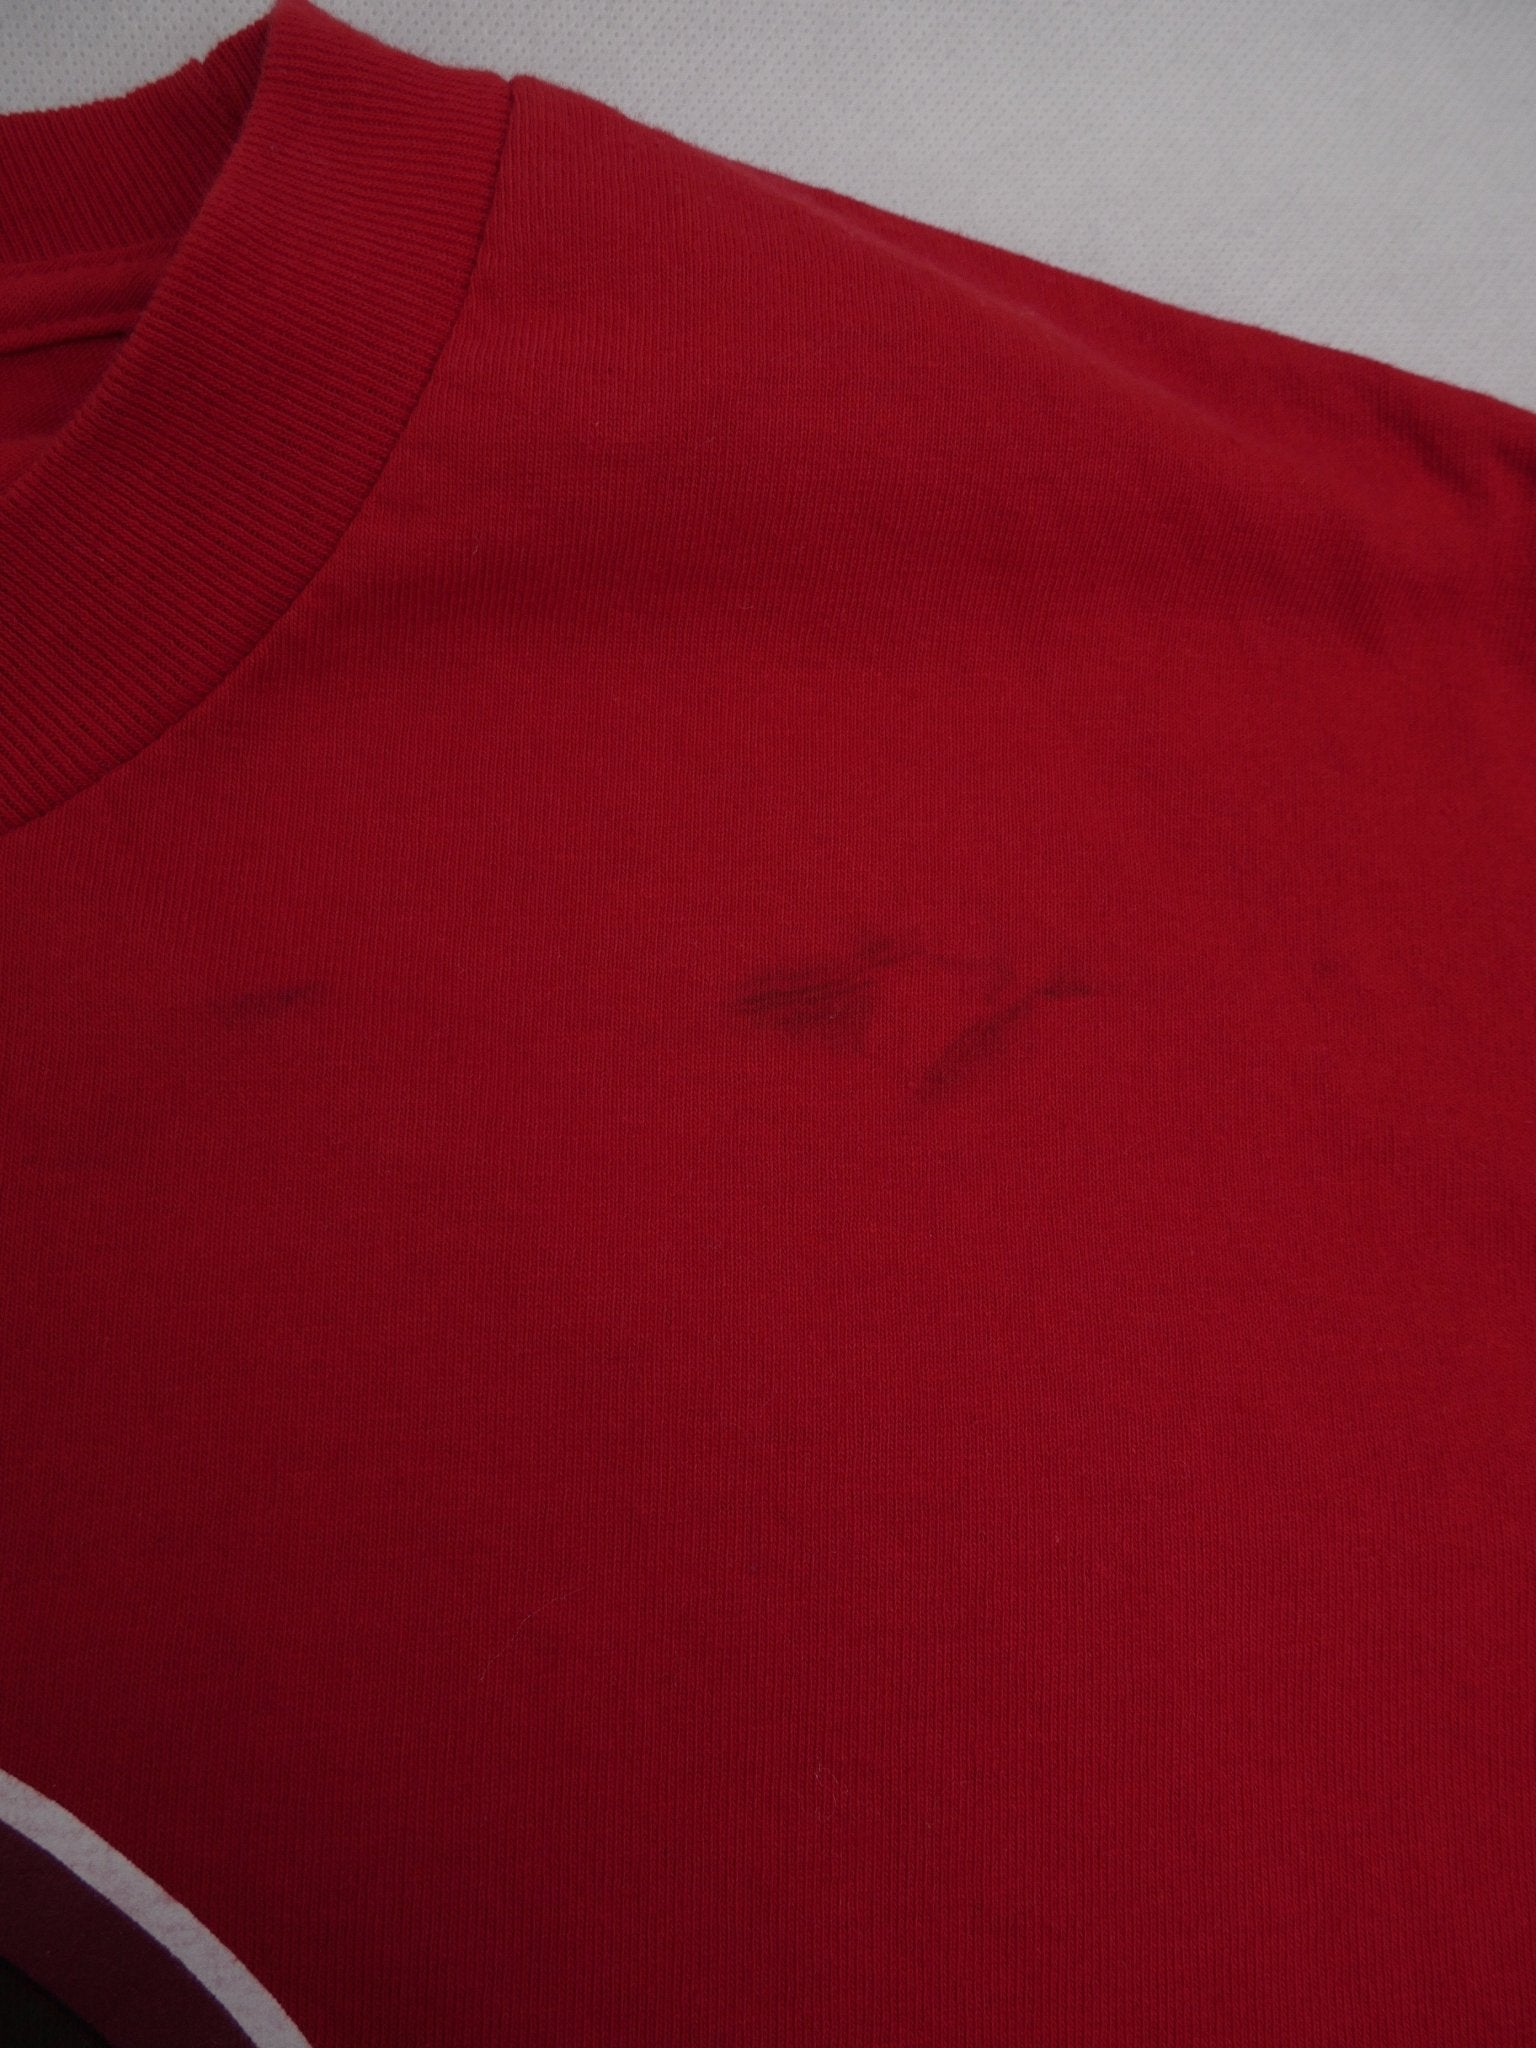 Reebok printed Graphic red Shirt - Peeces